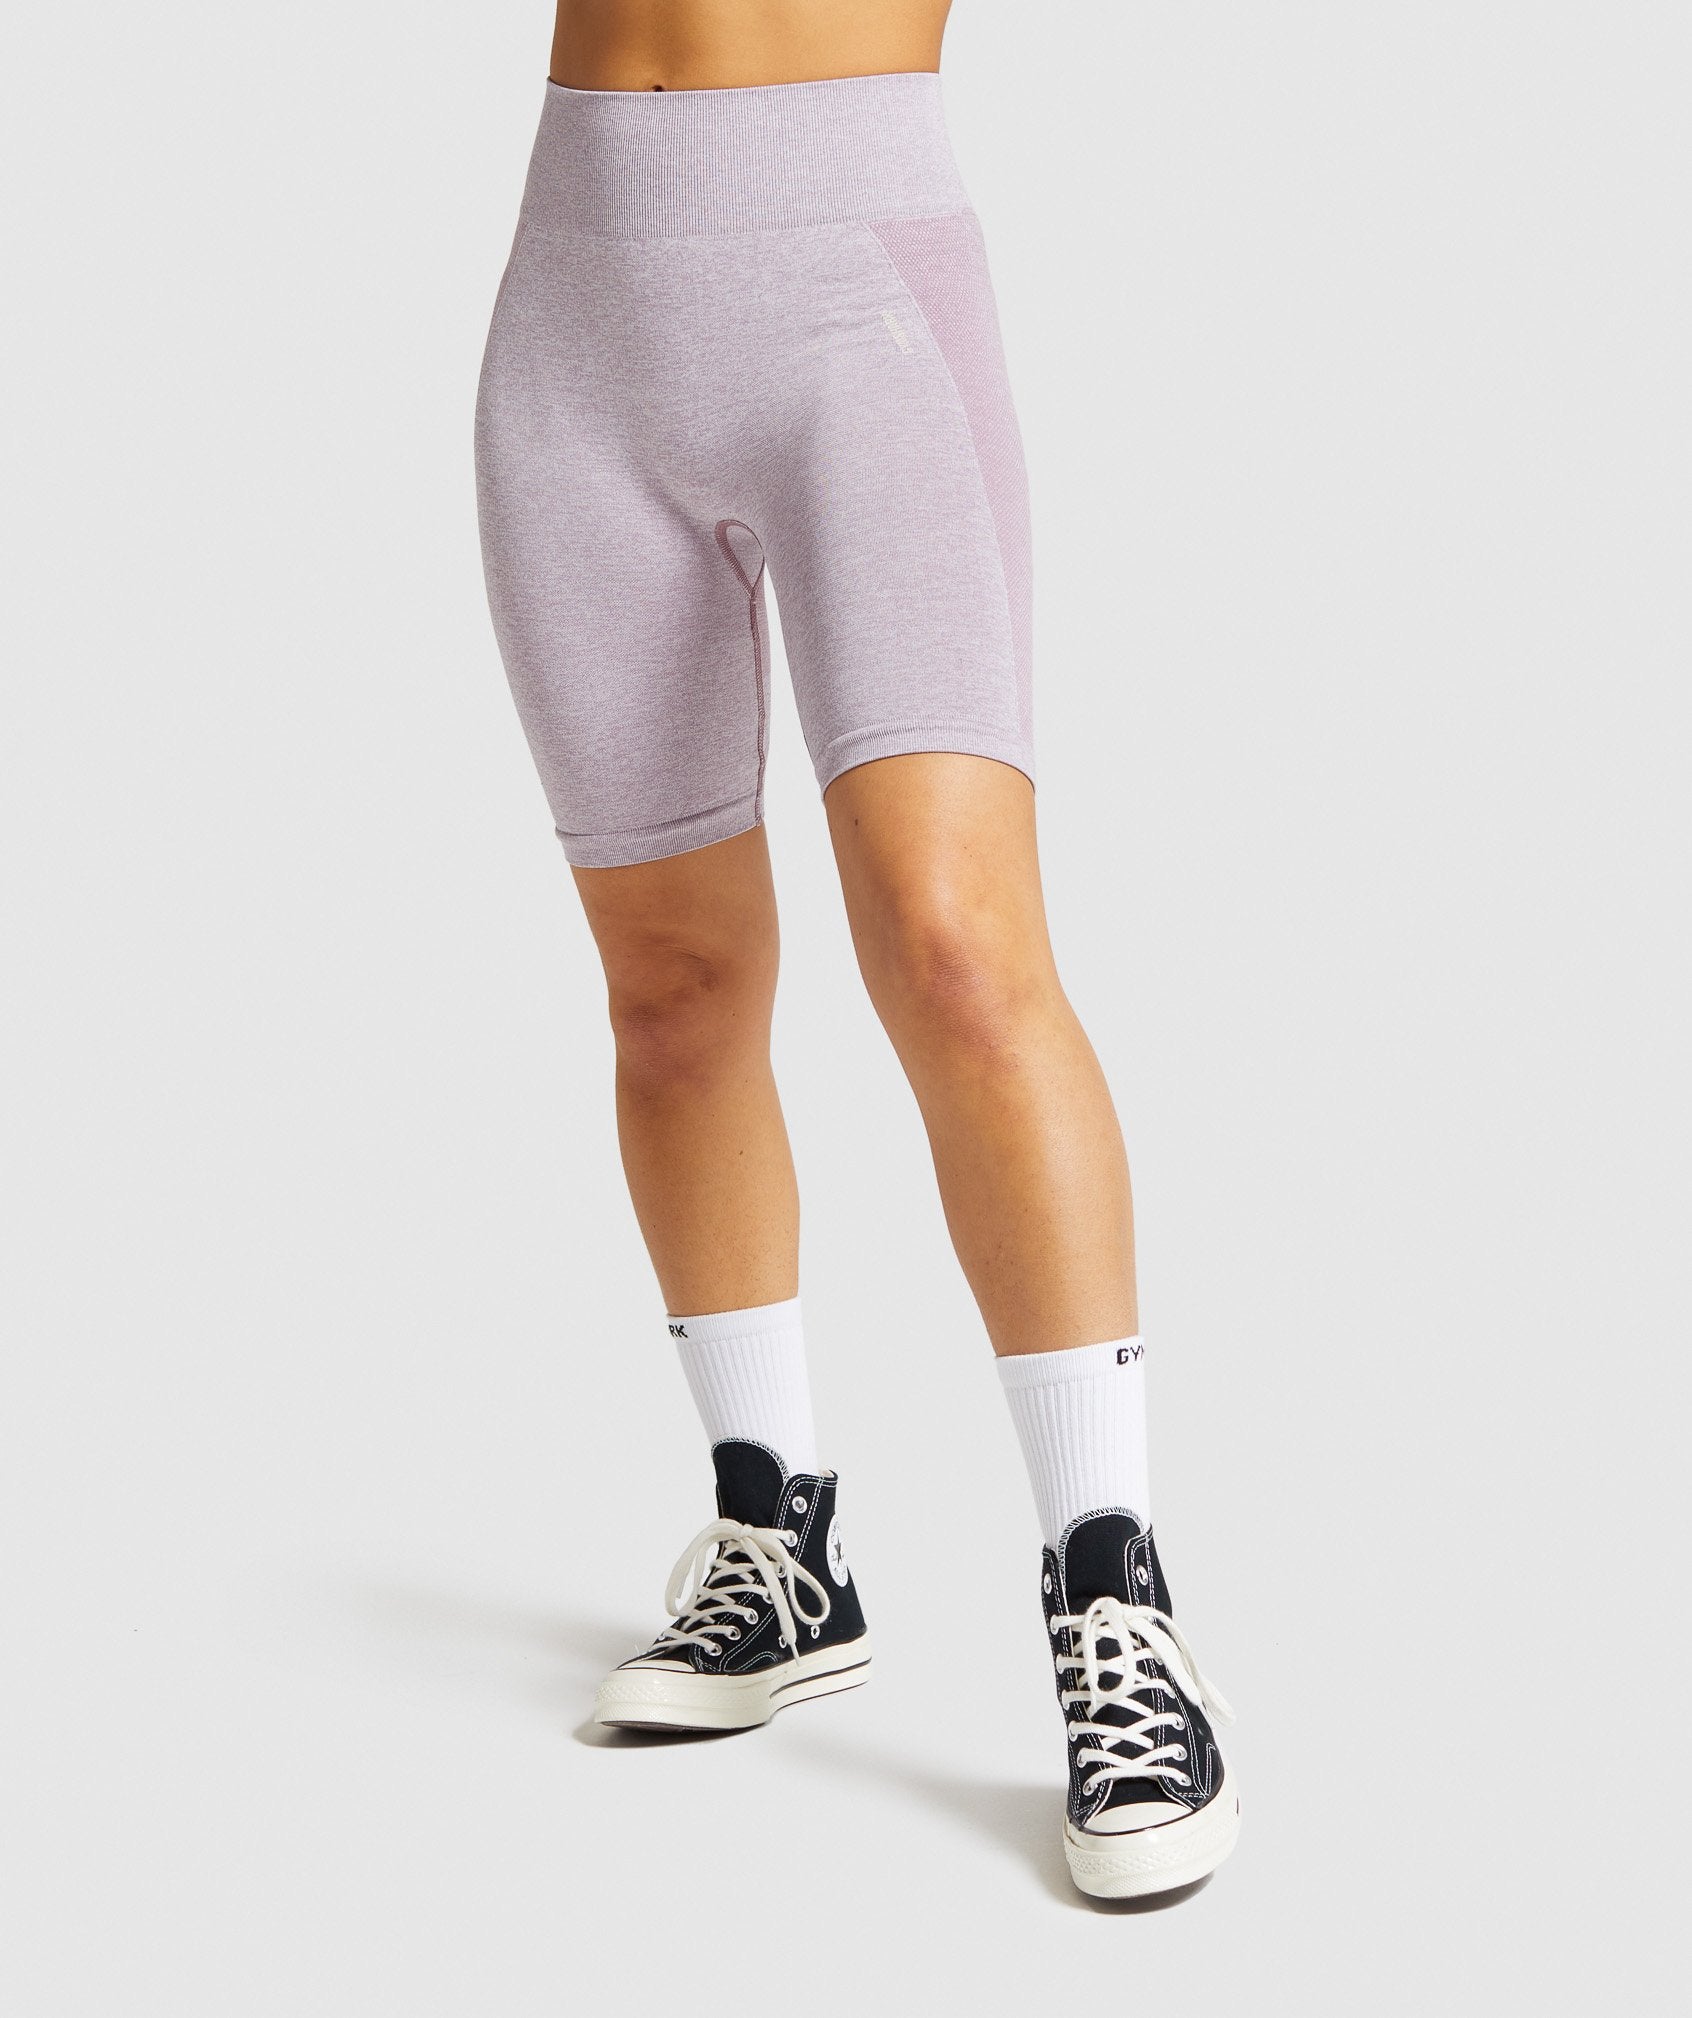 Plus Size Girl Try-On + Review of Gymshark Flex Biker Shorts 